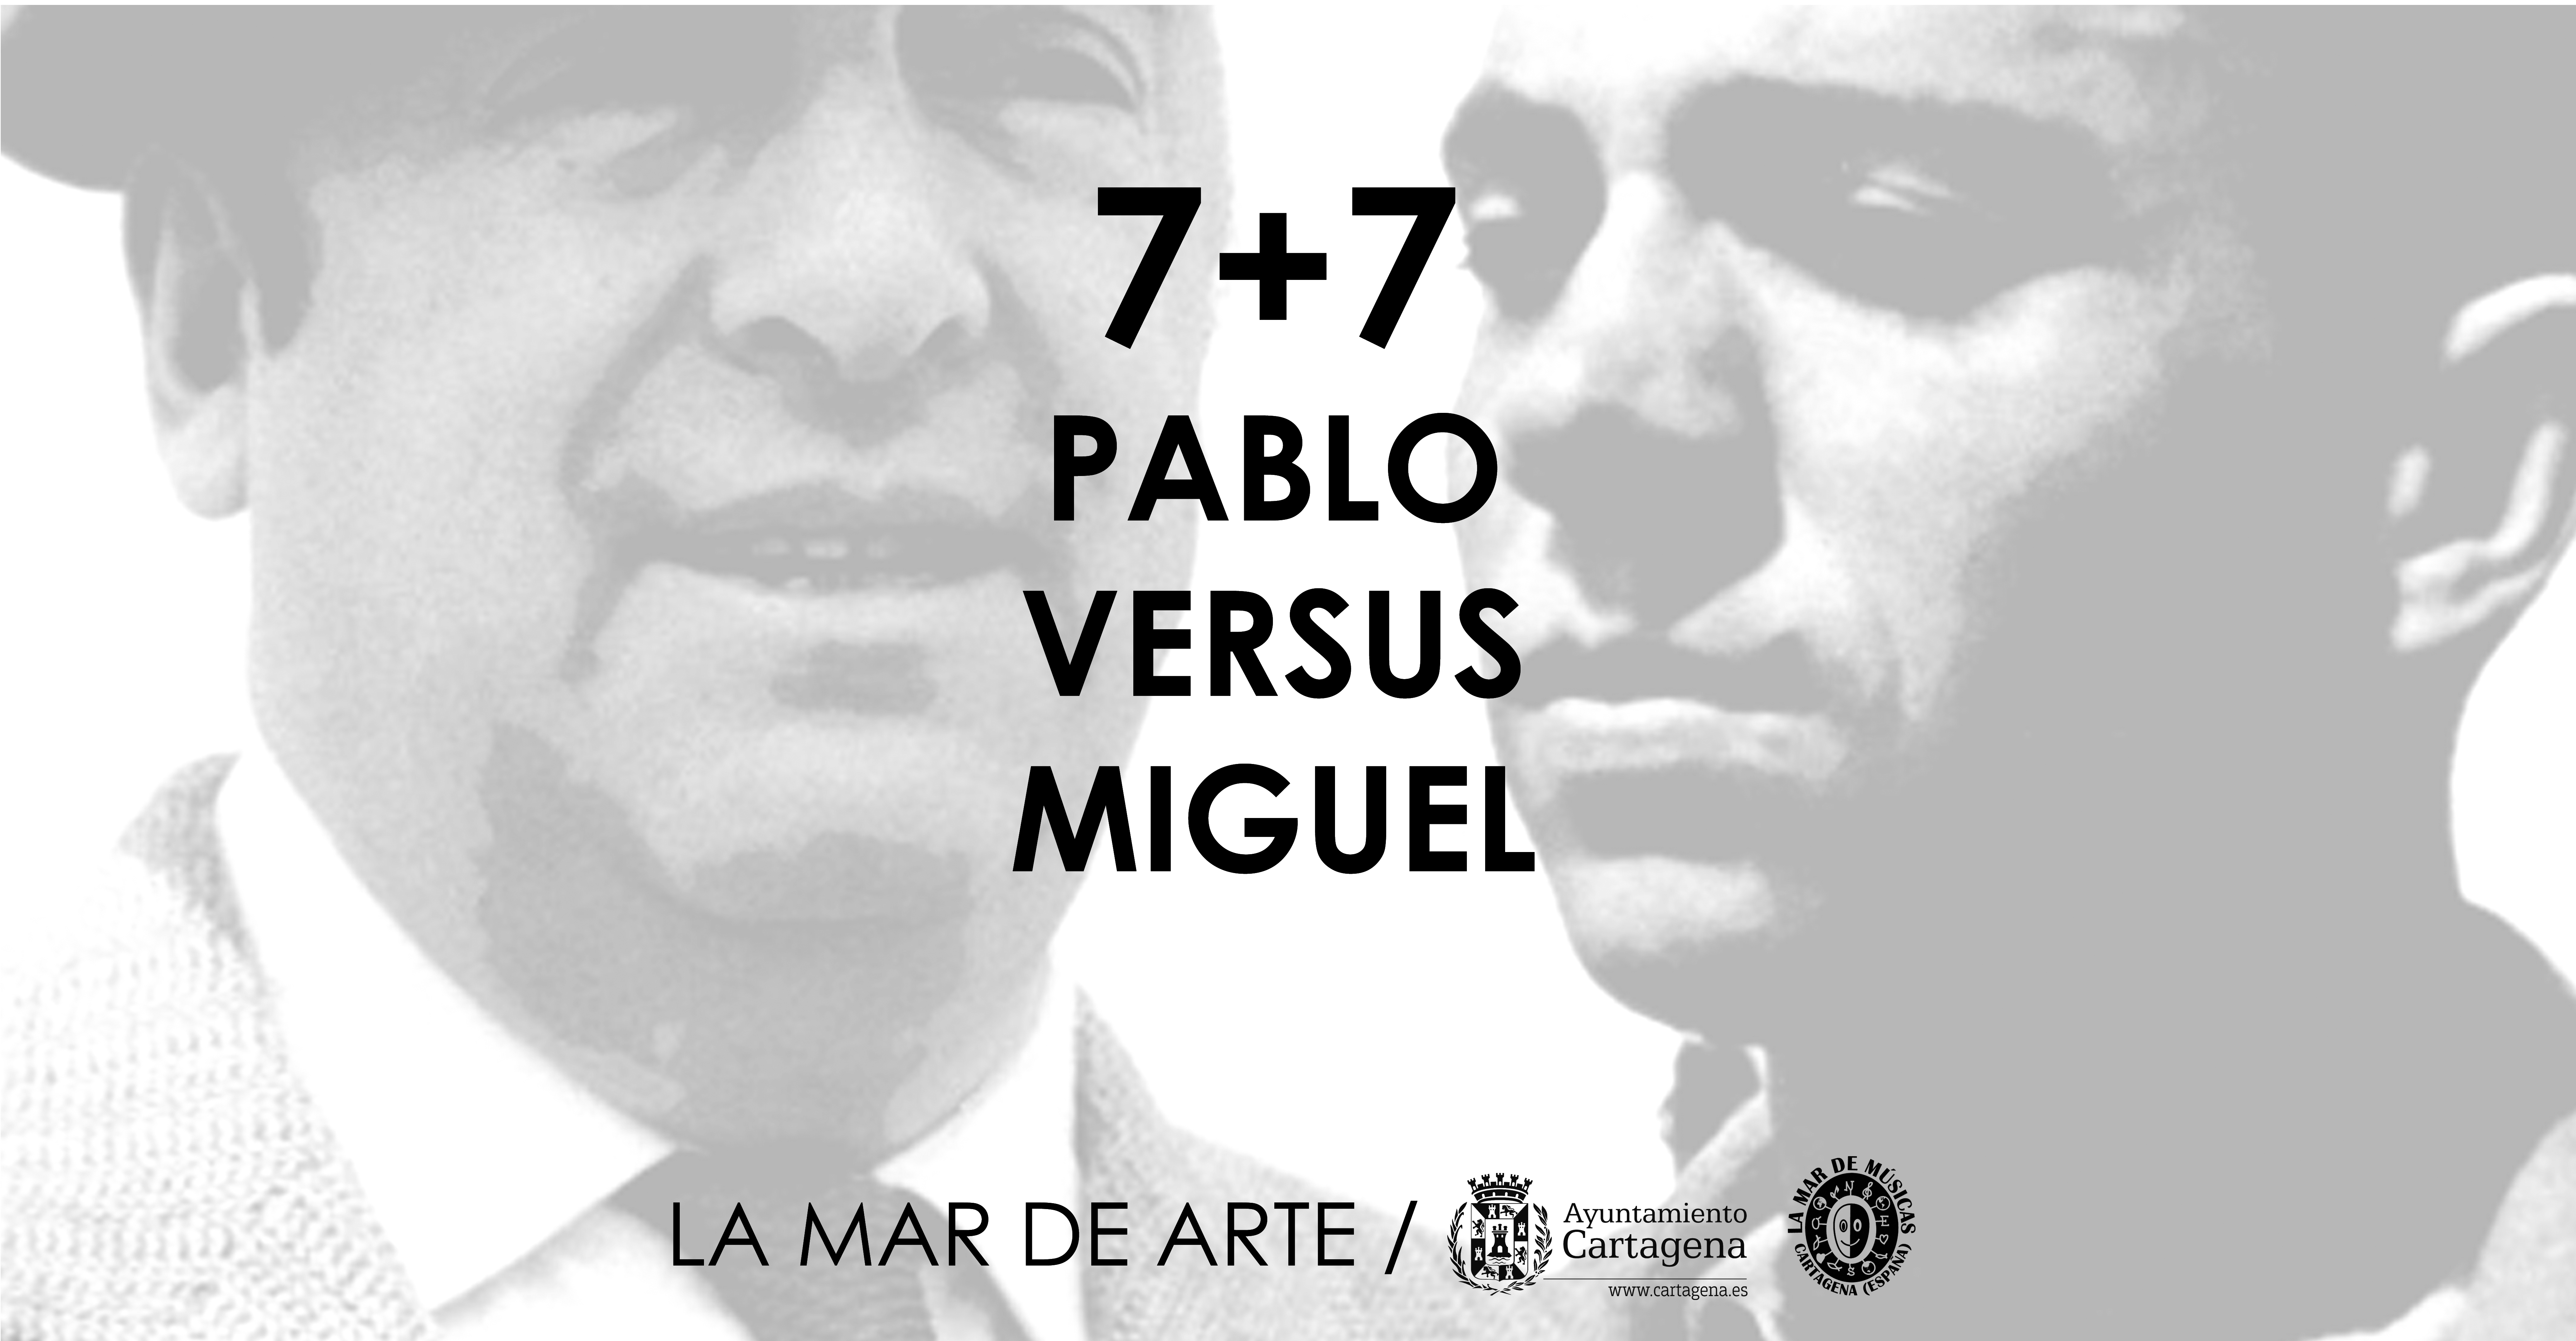 7+7: Pablo versus Miguel